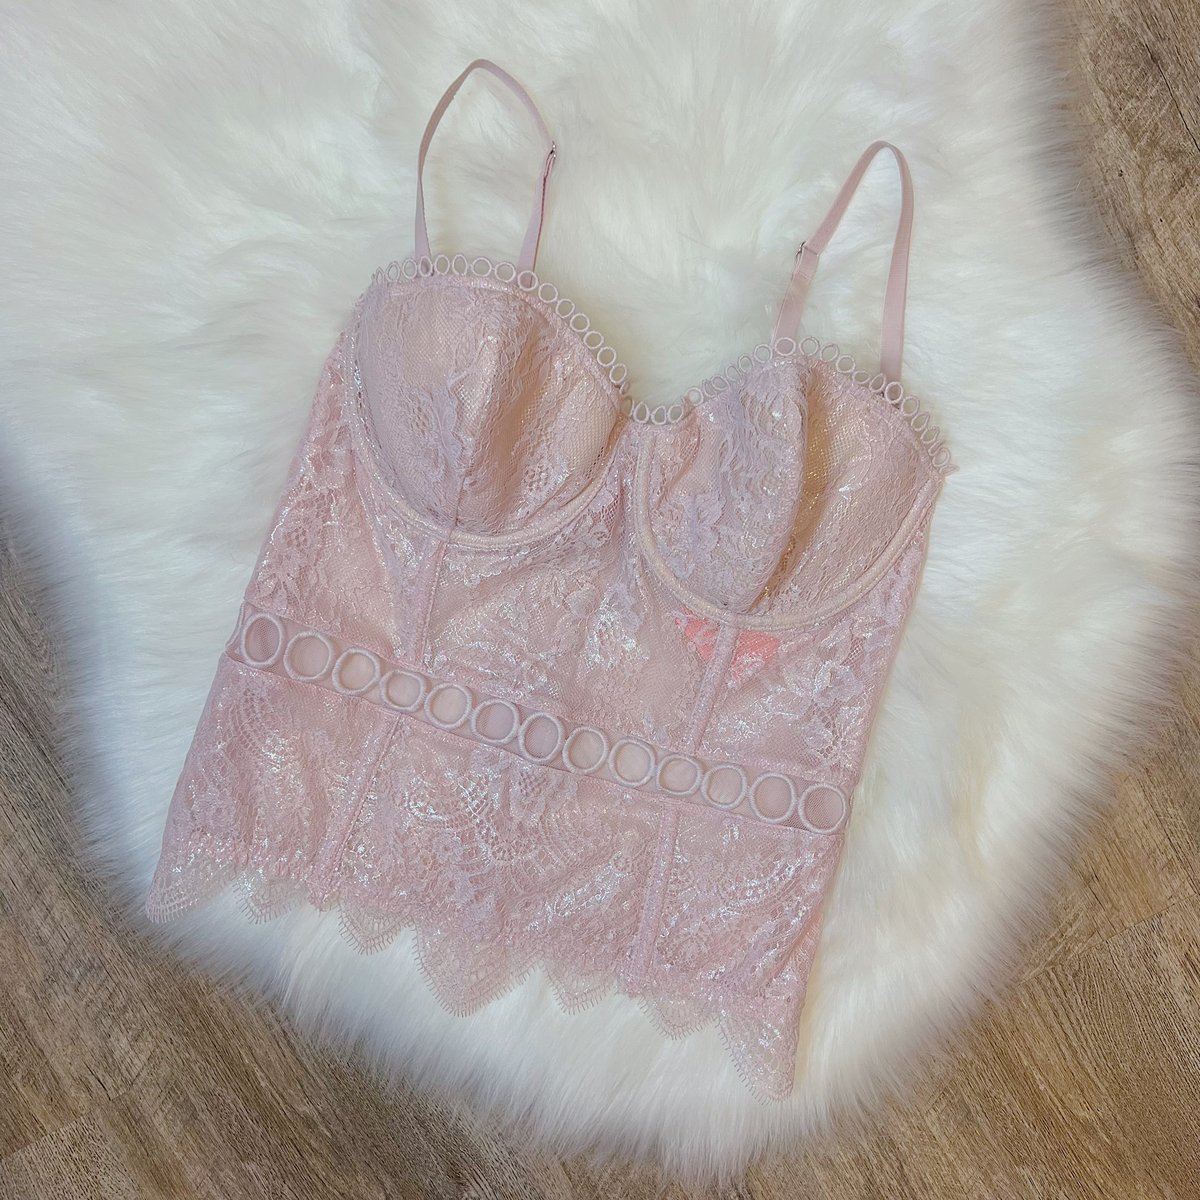 Size 36B/34C - Victoria's Secret 1990s Silk Blend Bustier Top